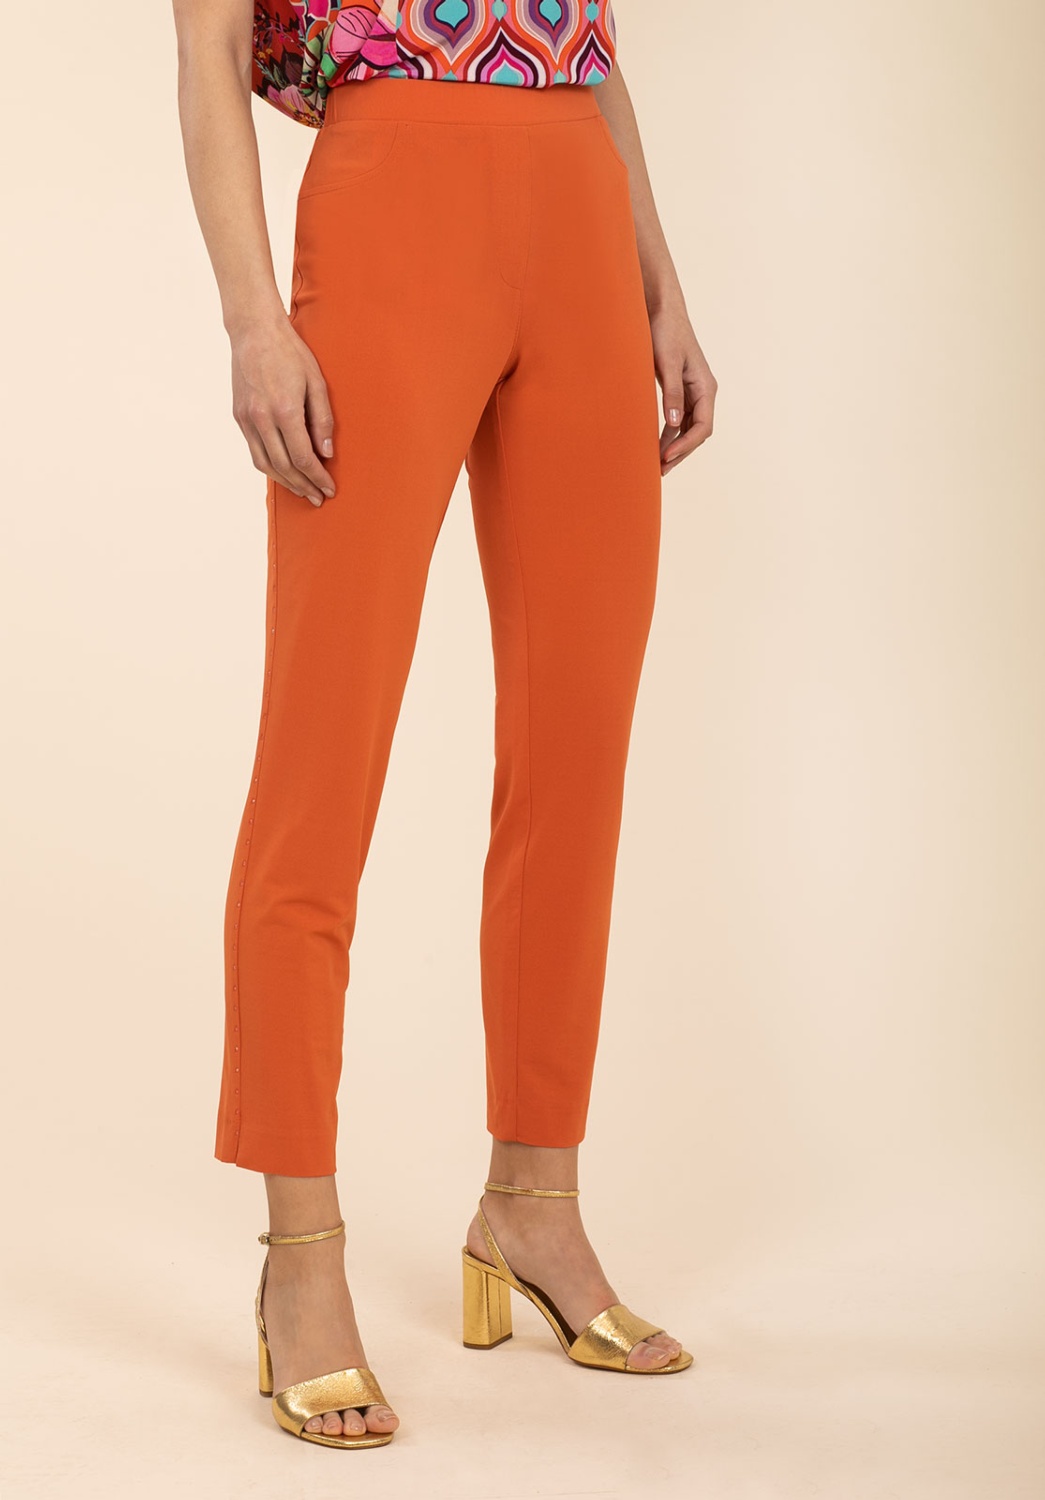 Pantalon orange à strass 1